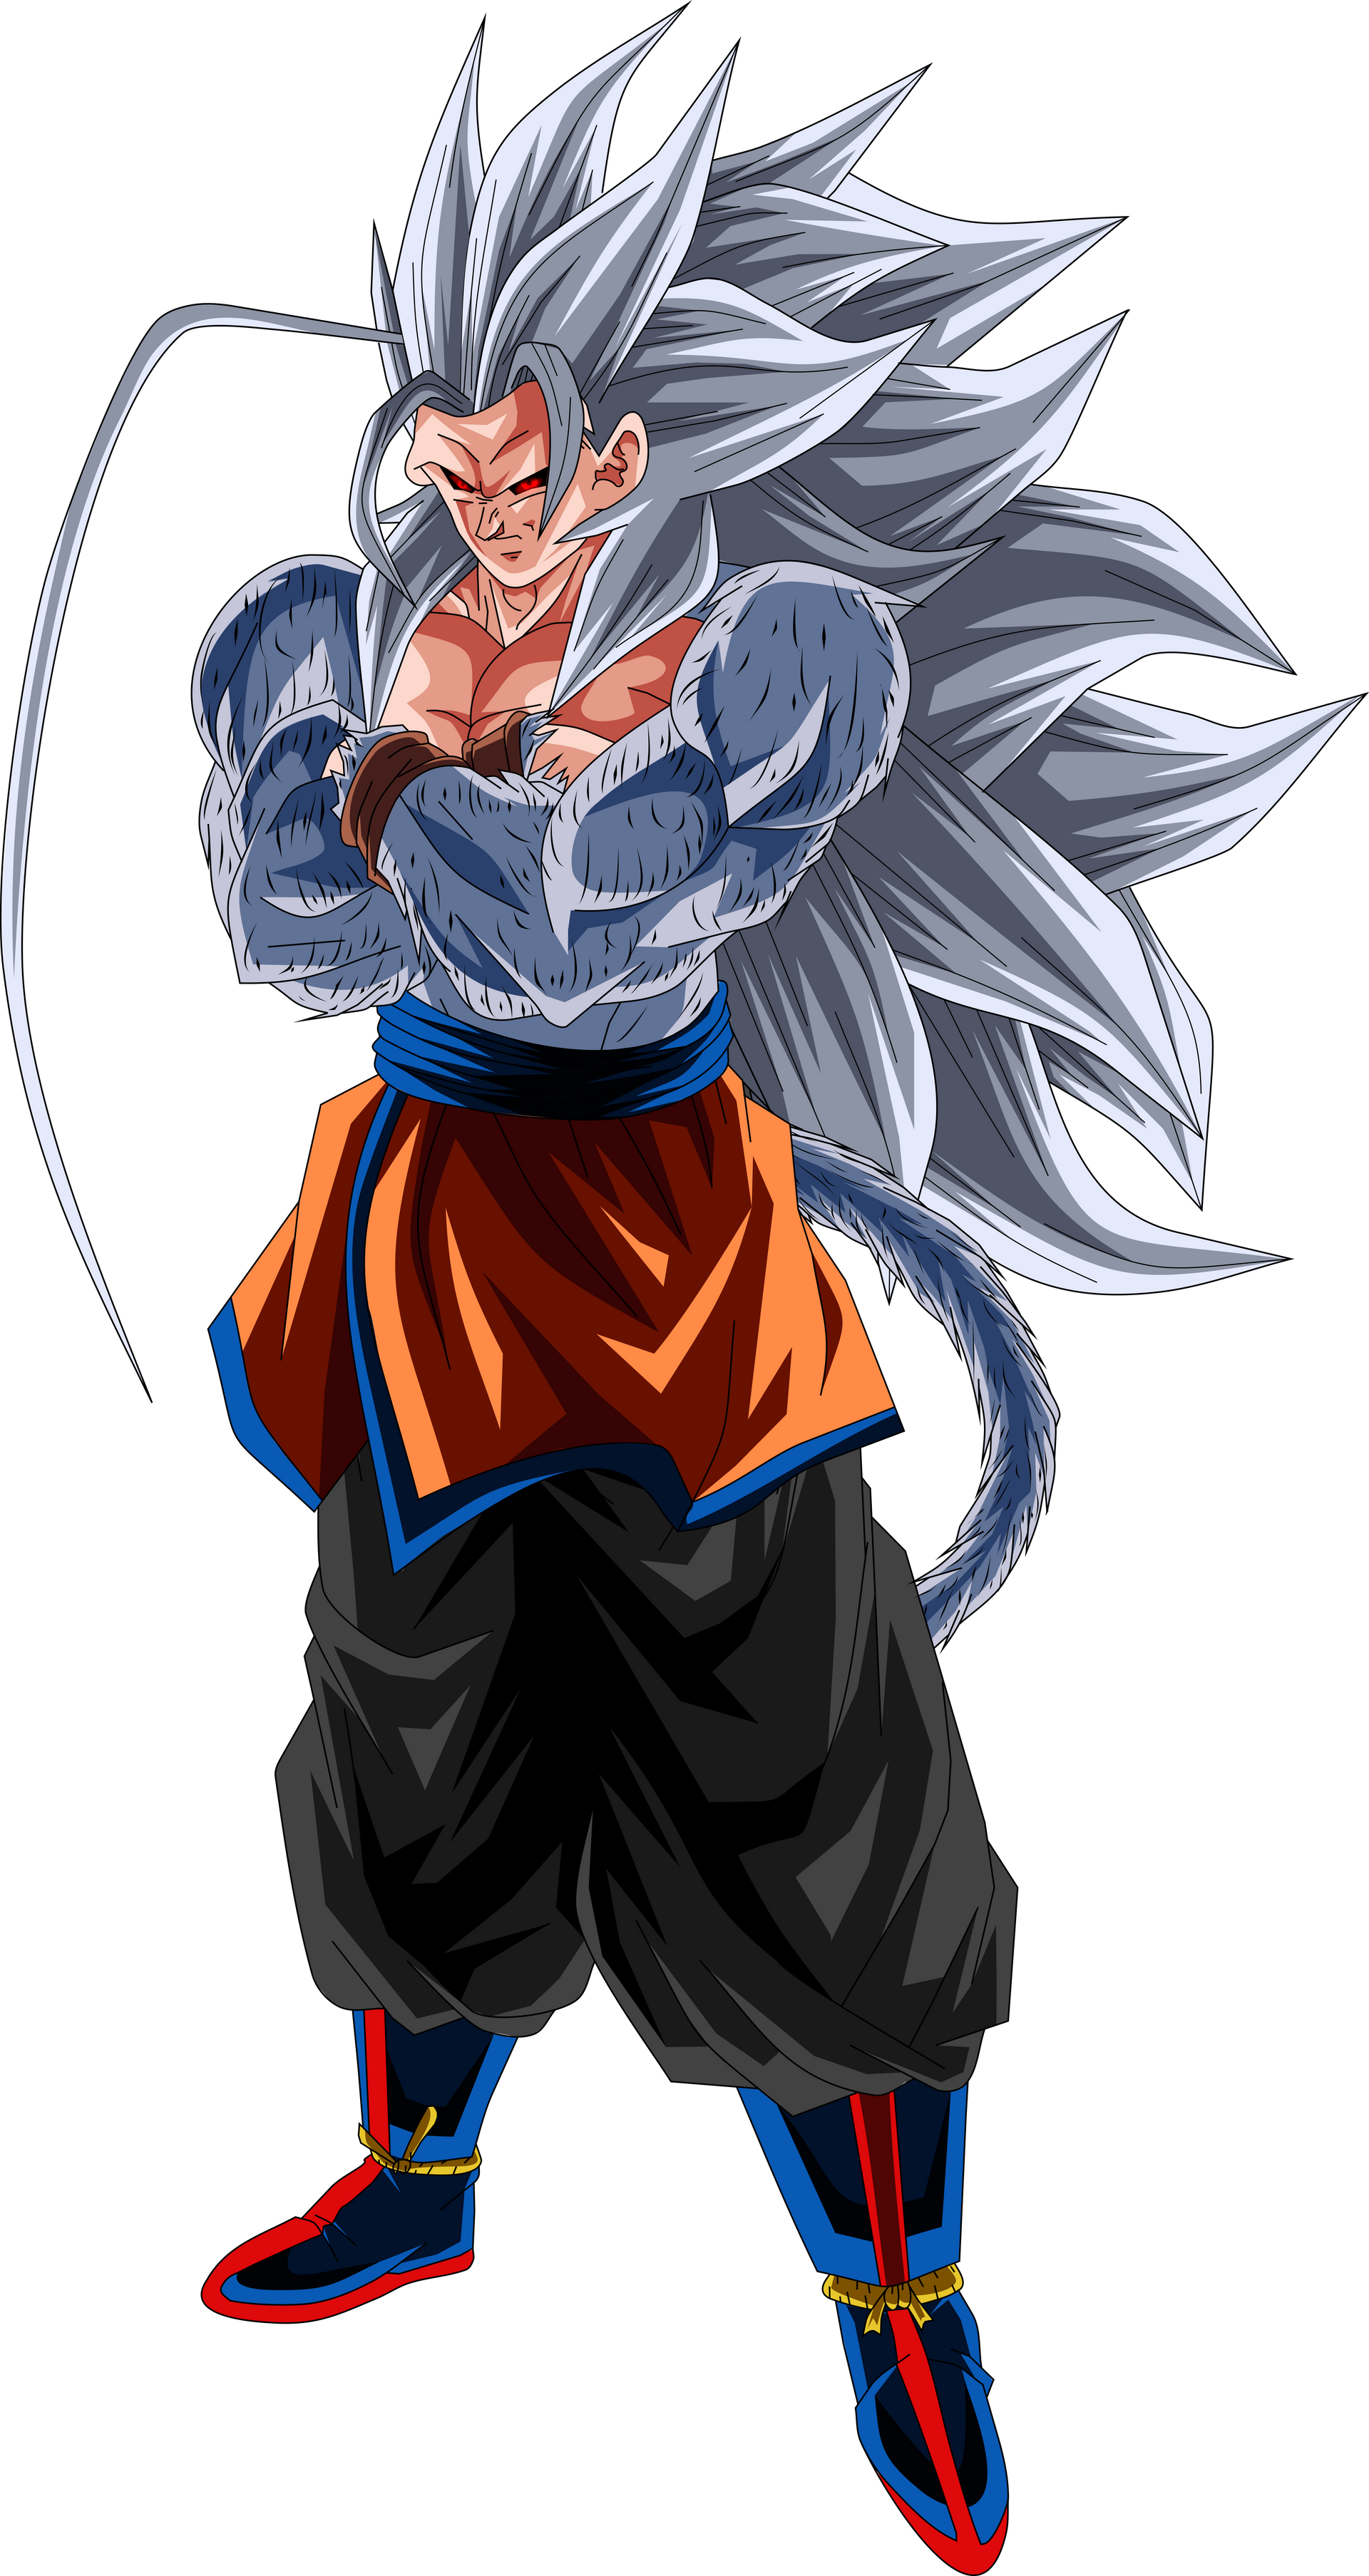 Goku ssj5 by ChronoFz on DeviantArt